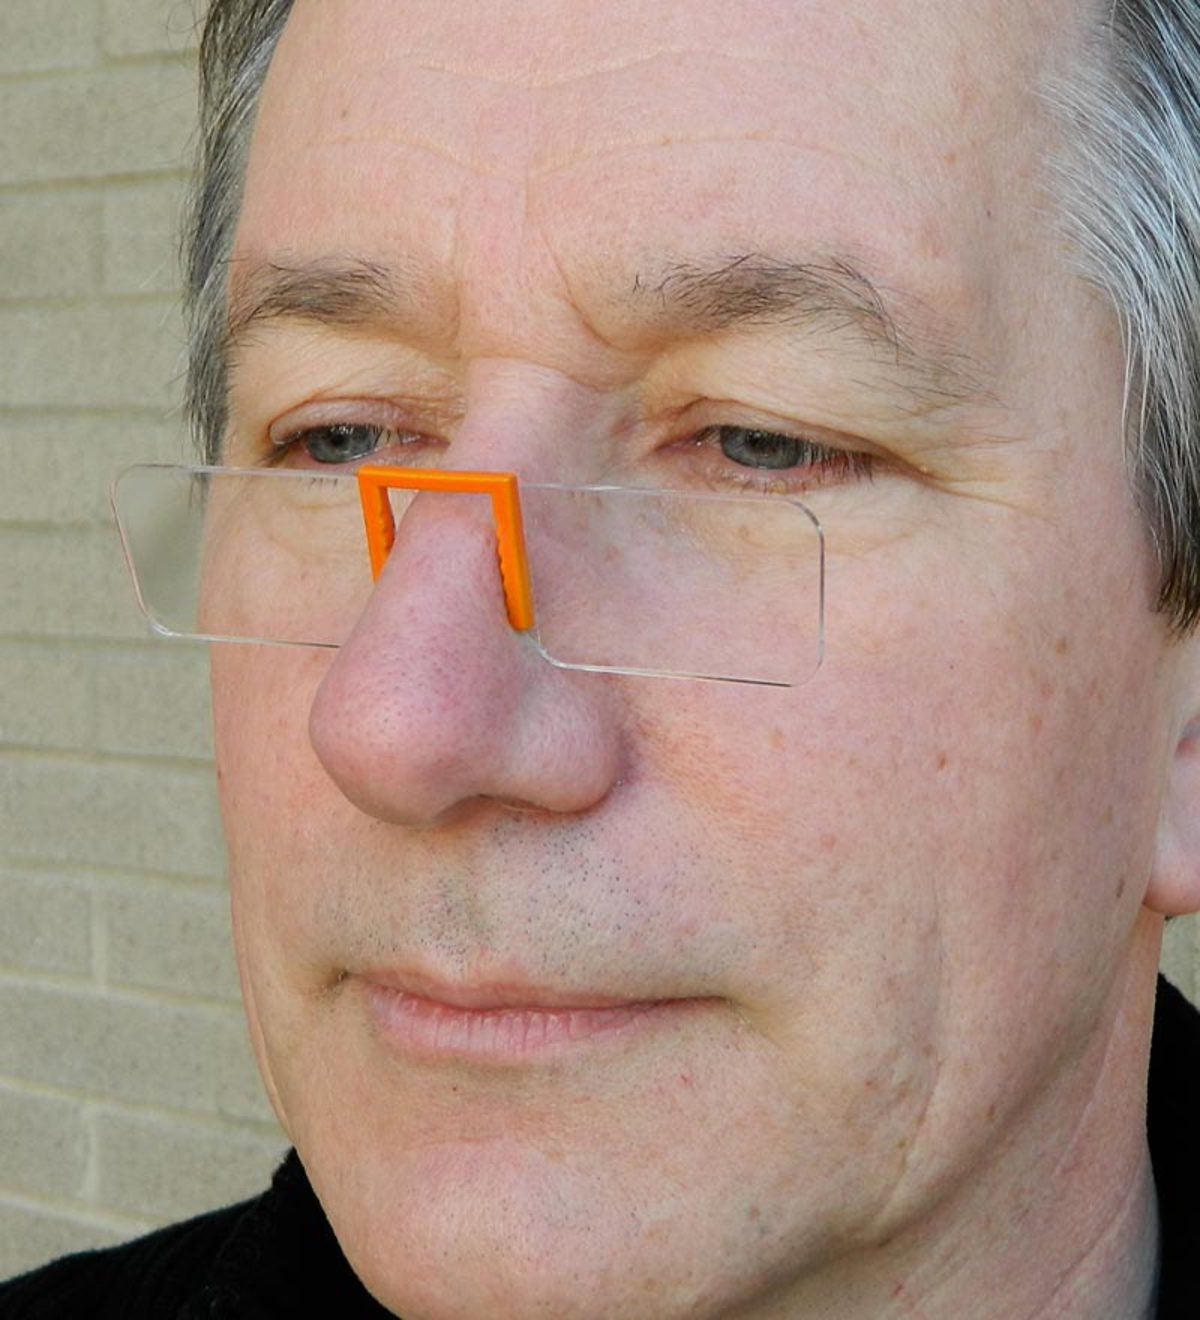 Qwertzy Reading Glasses, Set of 2 - Orange - +